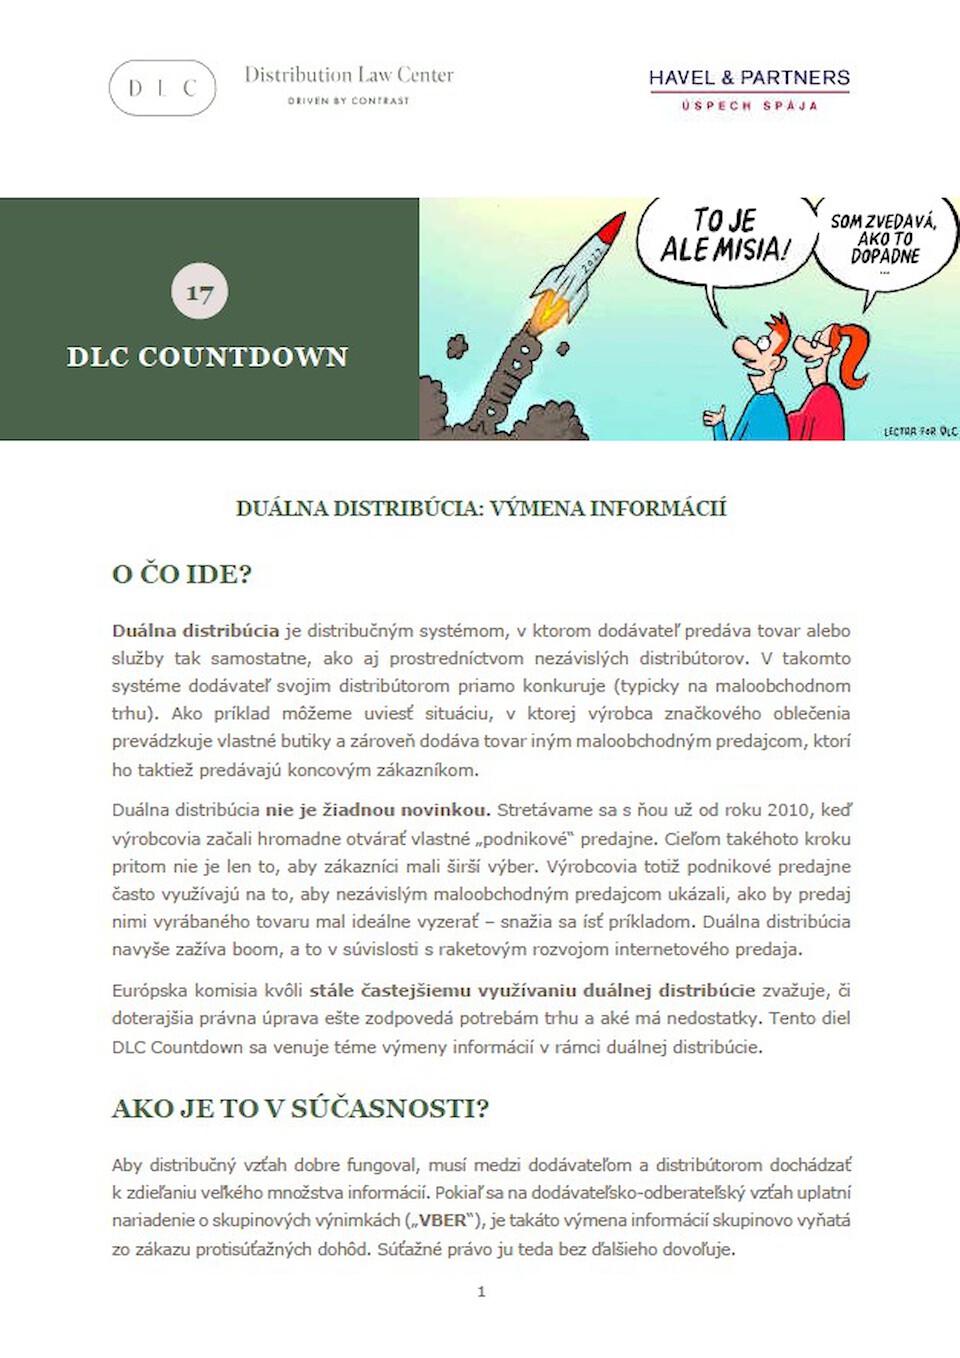 Distribution Law Center Countdown XVII - Dual distribution (Information exchange (Article 2(5) VBER))